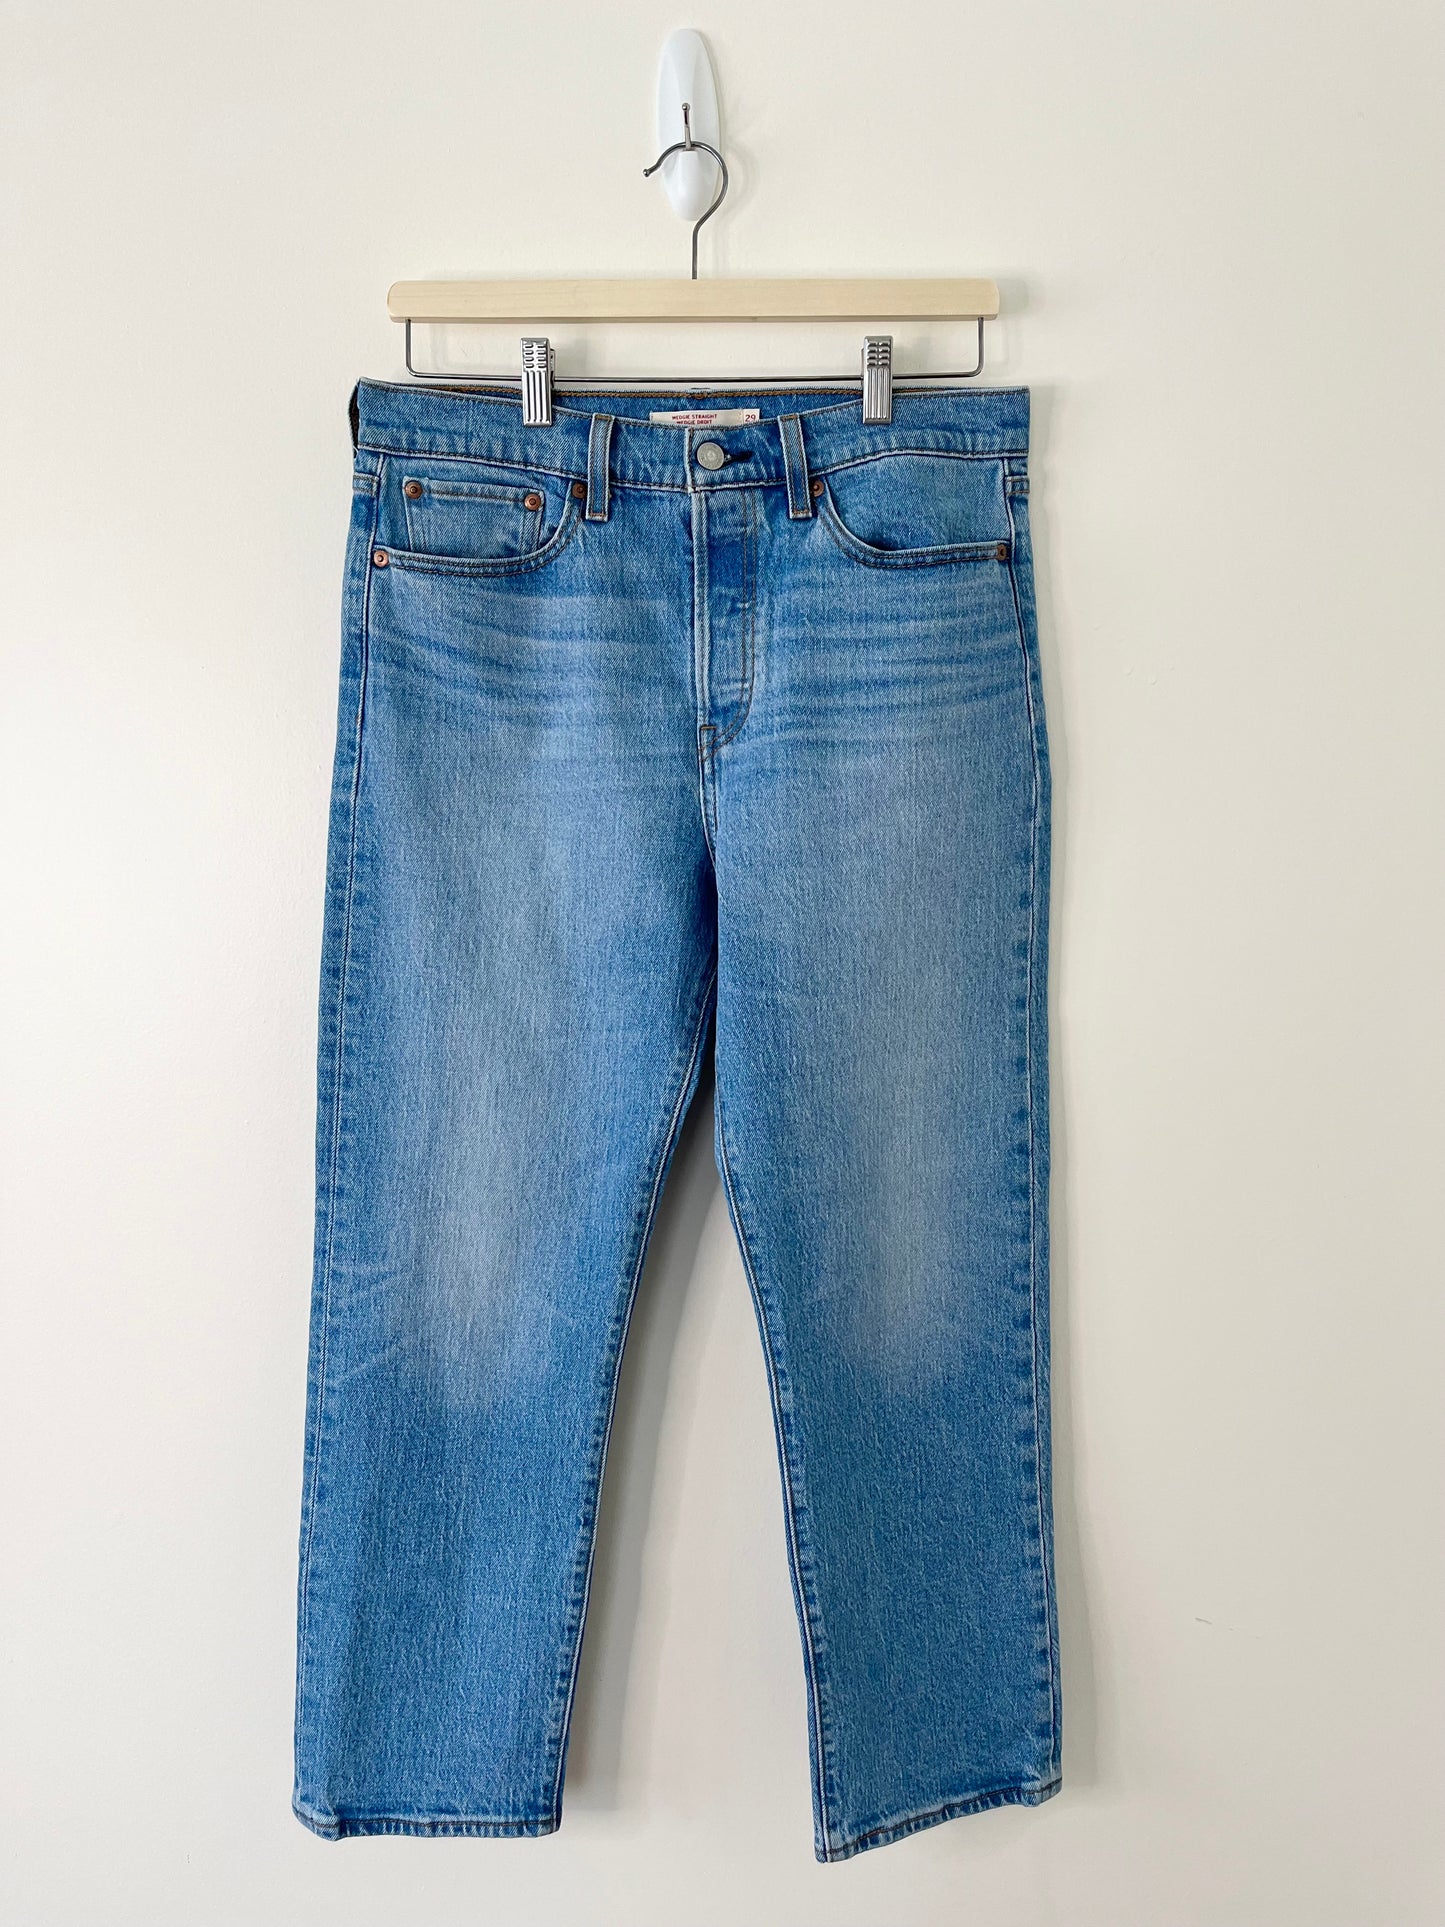 Levi's Wedgie Straight Jeans (15.5" across waist)